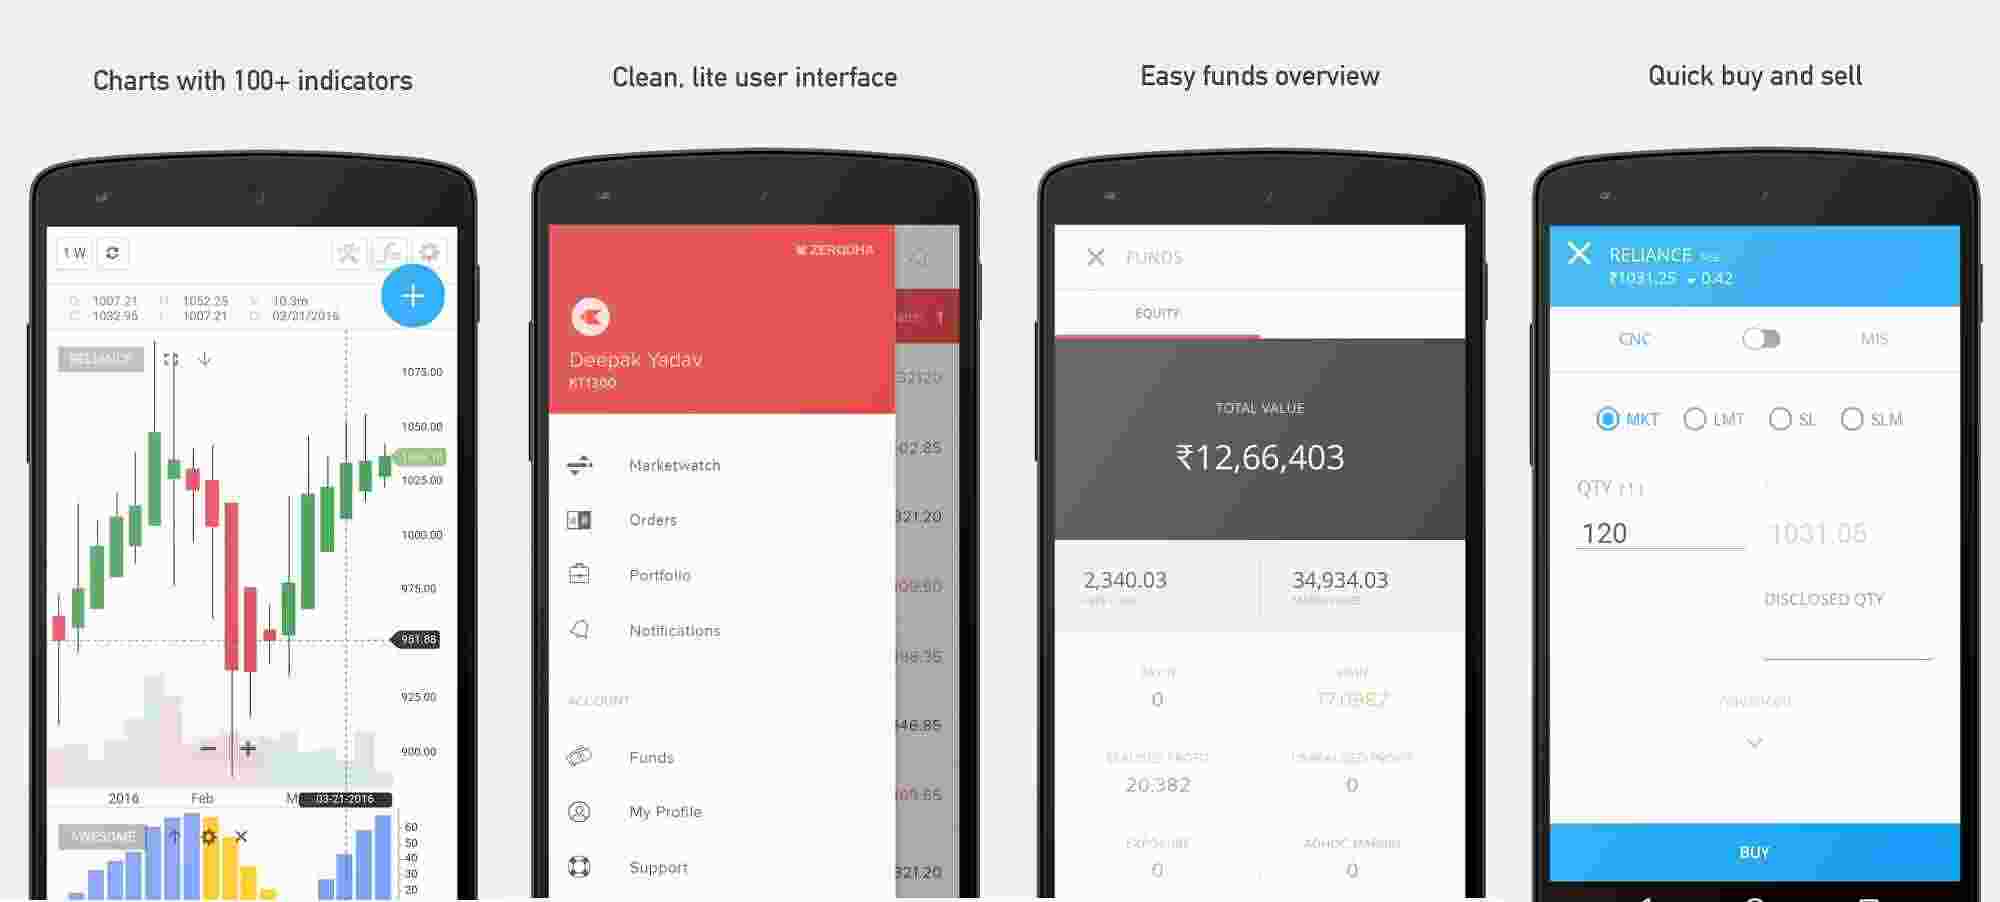 Zerodha Kite Mobile App HINDI Review 2020 | Features, Speed